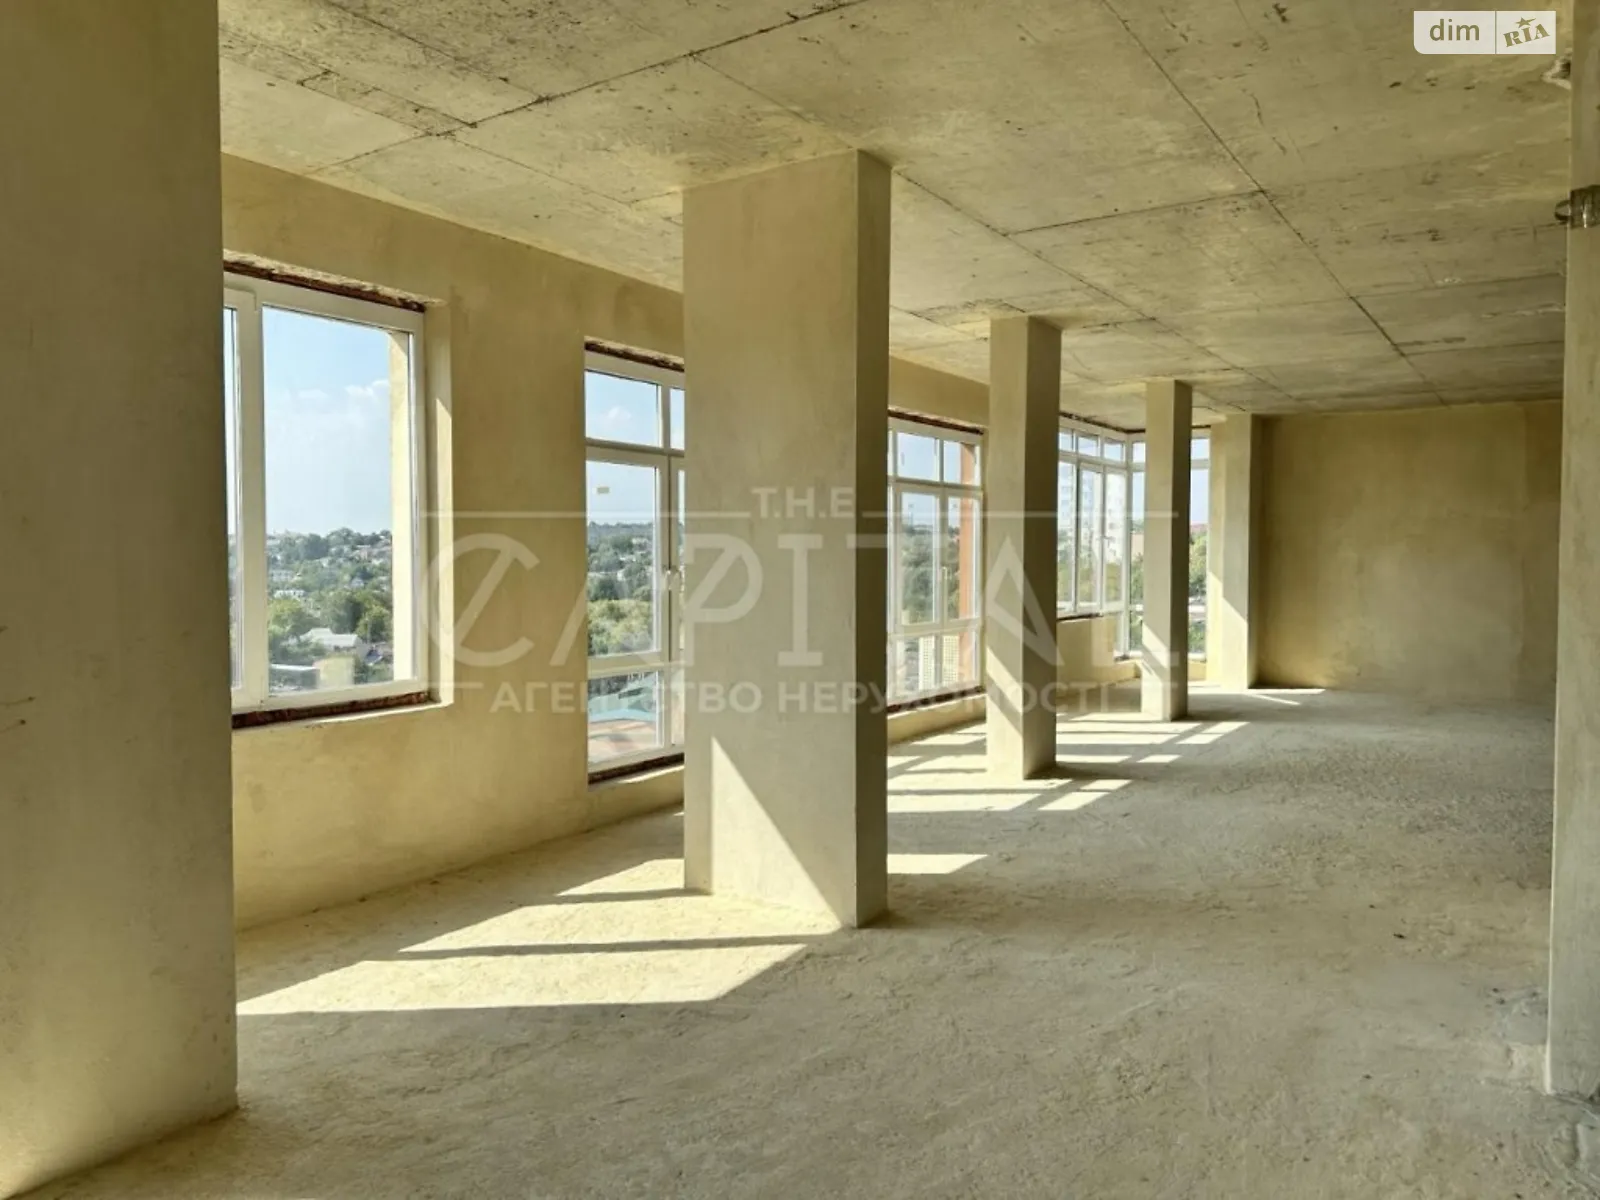 Продается 1-комнатная квартира 41.07 кв. м в Умани - фото 3